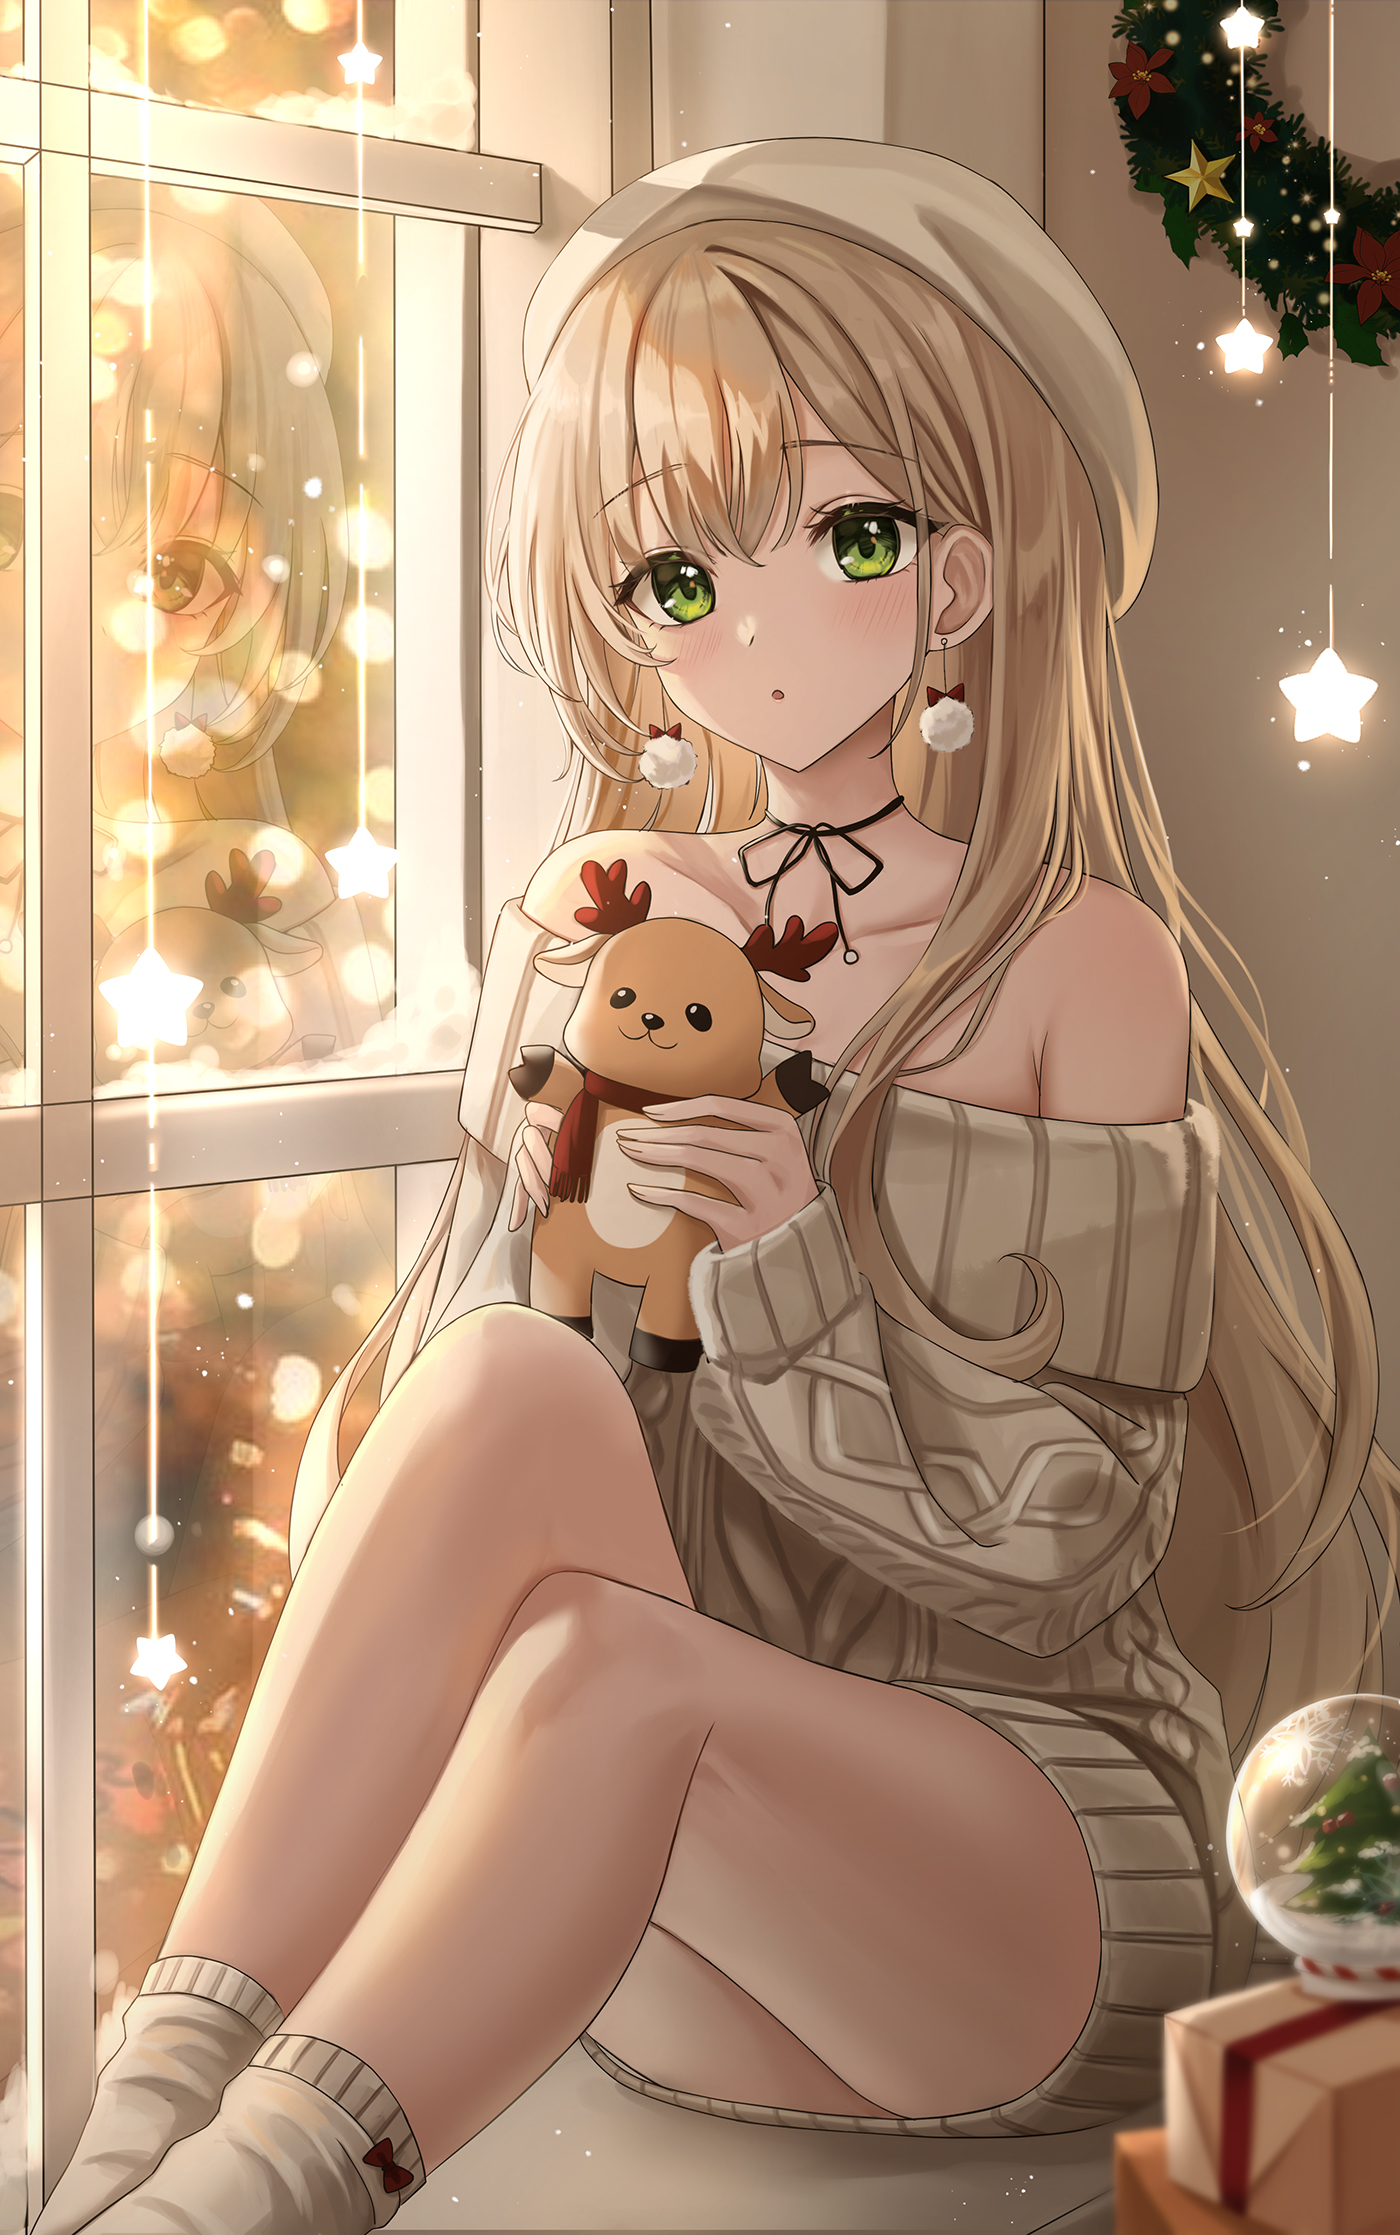 Anime Anime Girls Choker Green Eyes Blonde Reflection Vertical Stars Christmas Ornaments 1400x2235